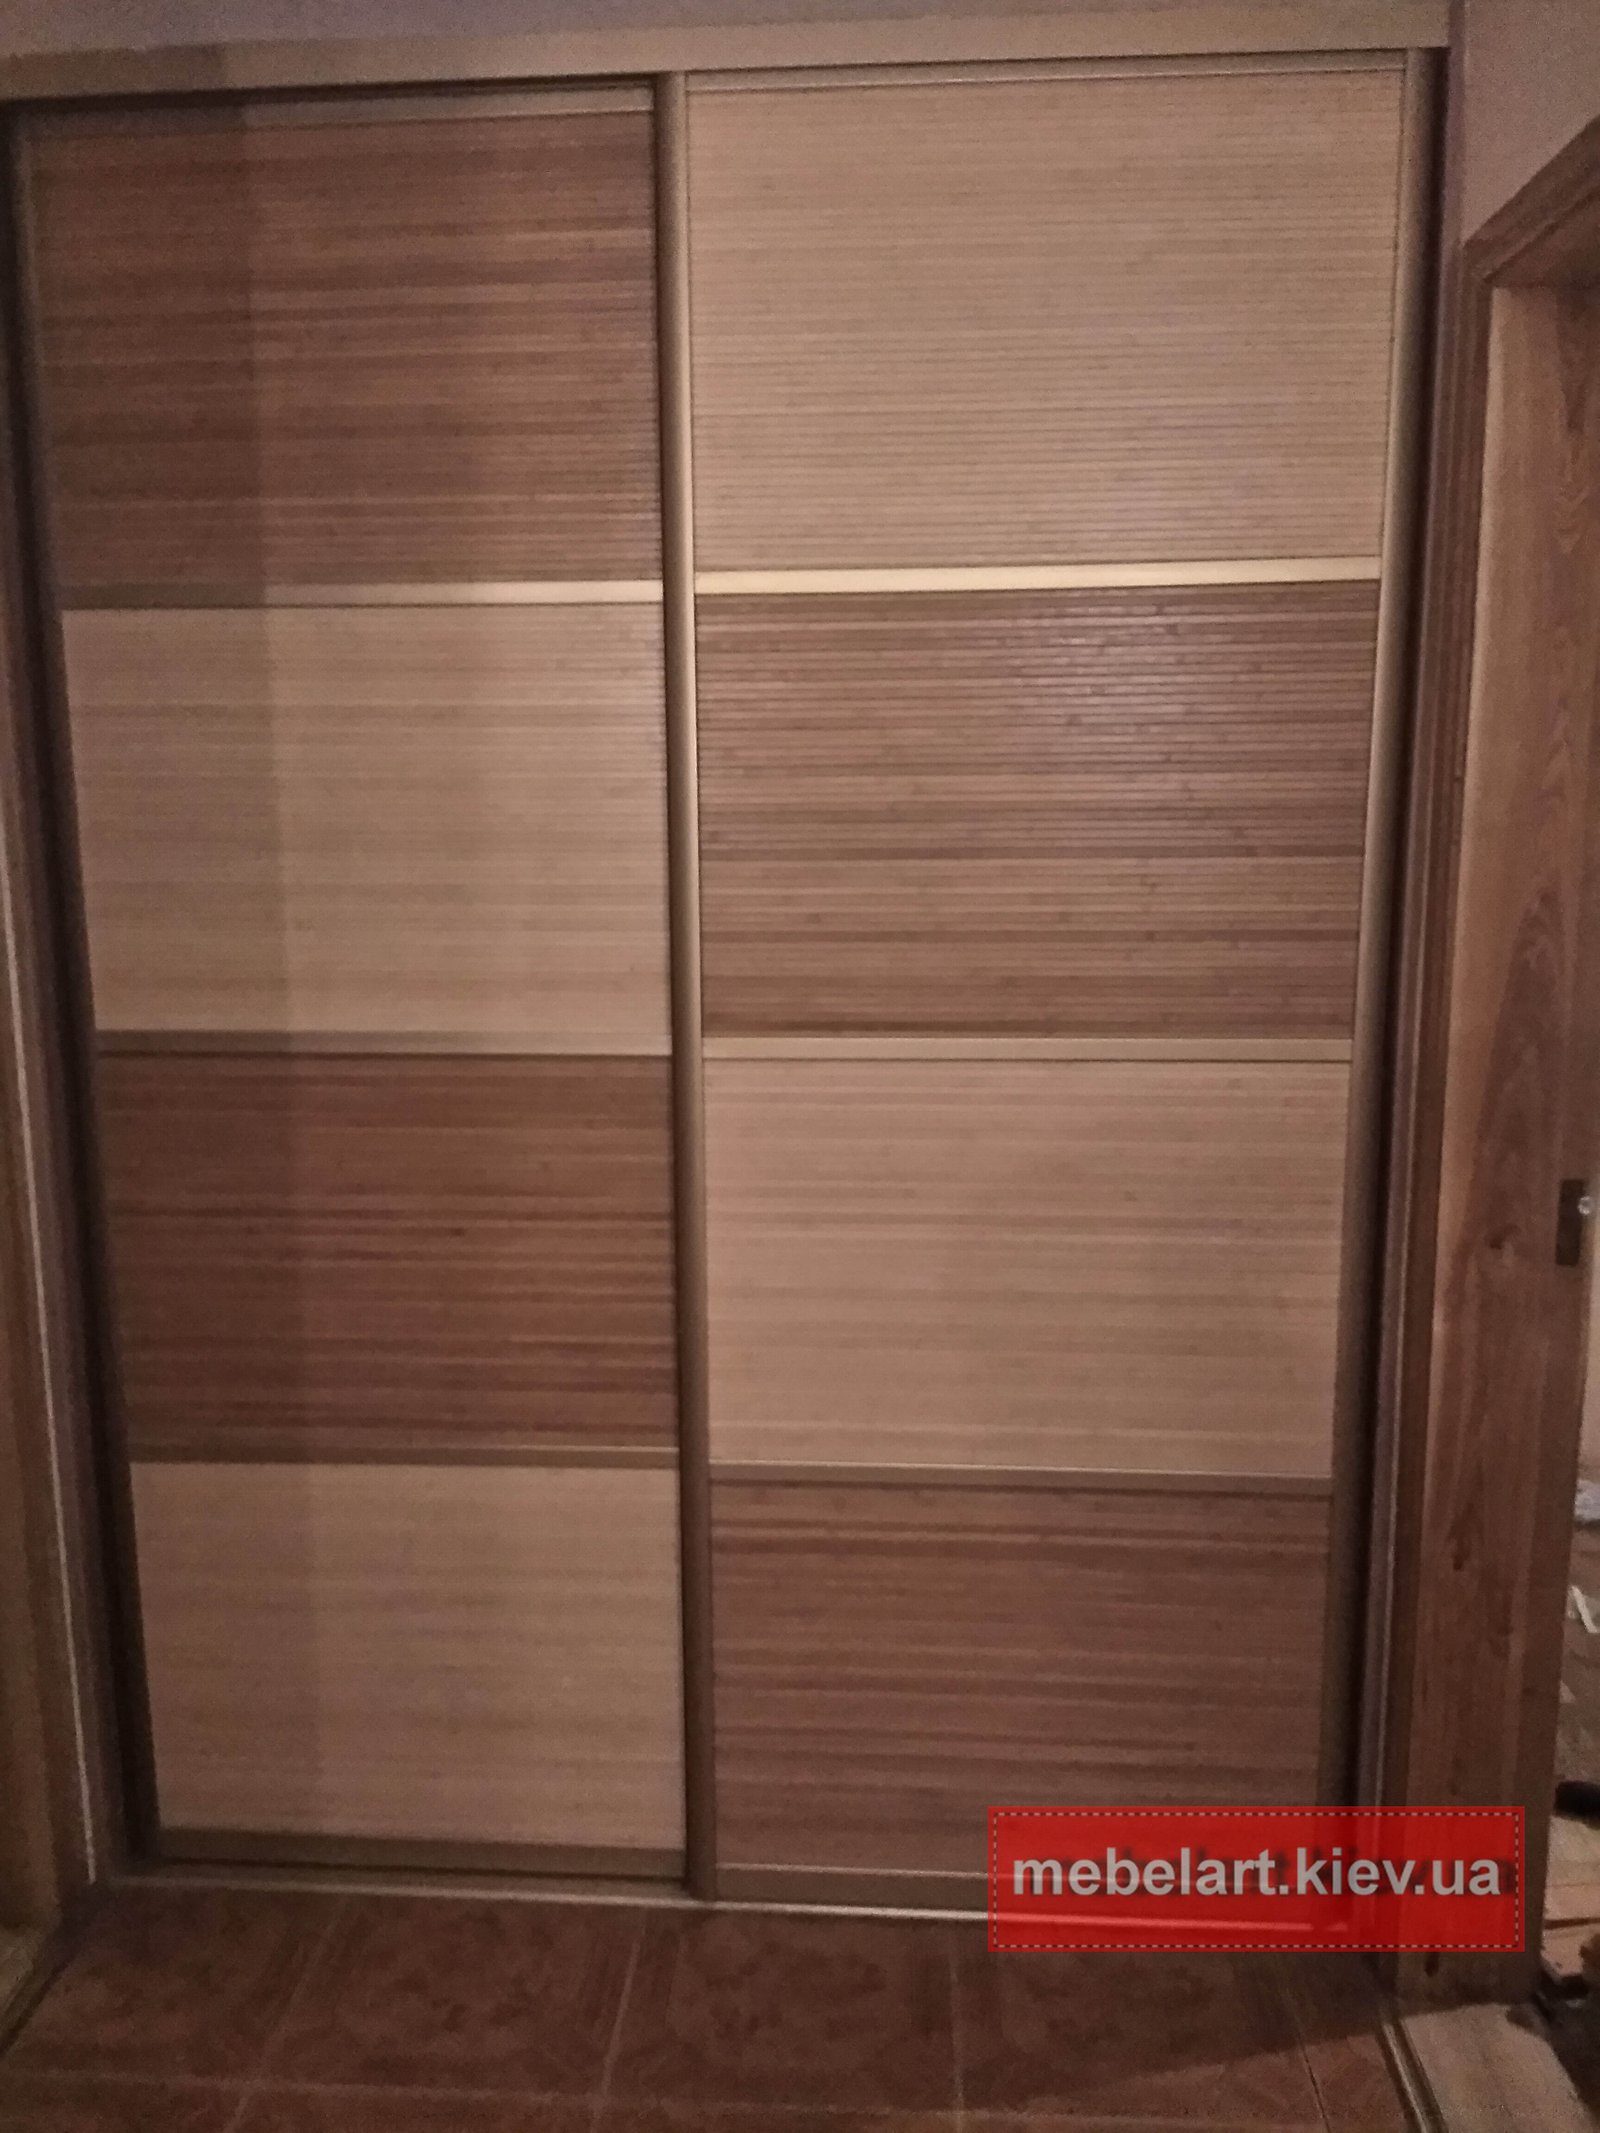 шкаф с фасадами из бамбука